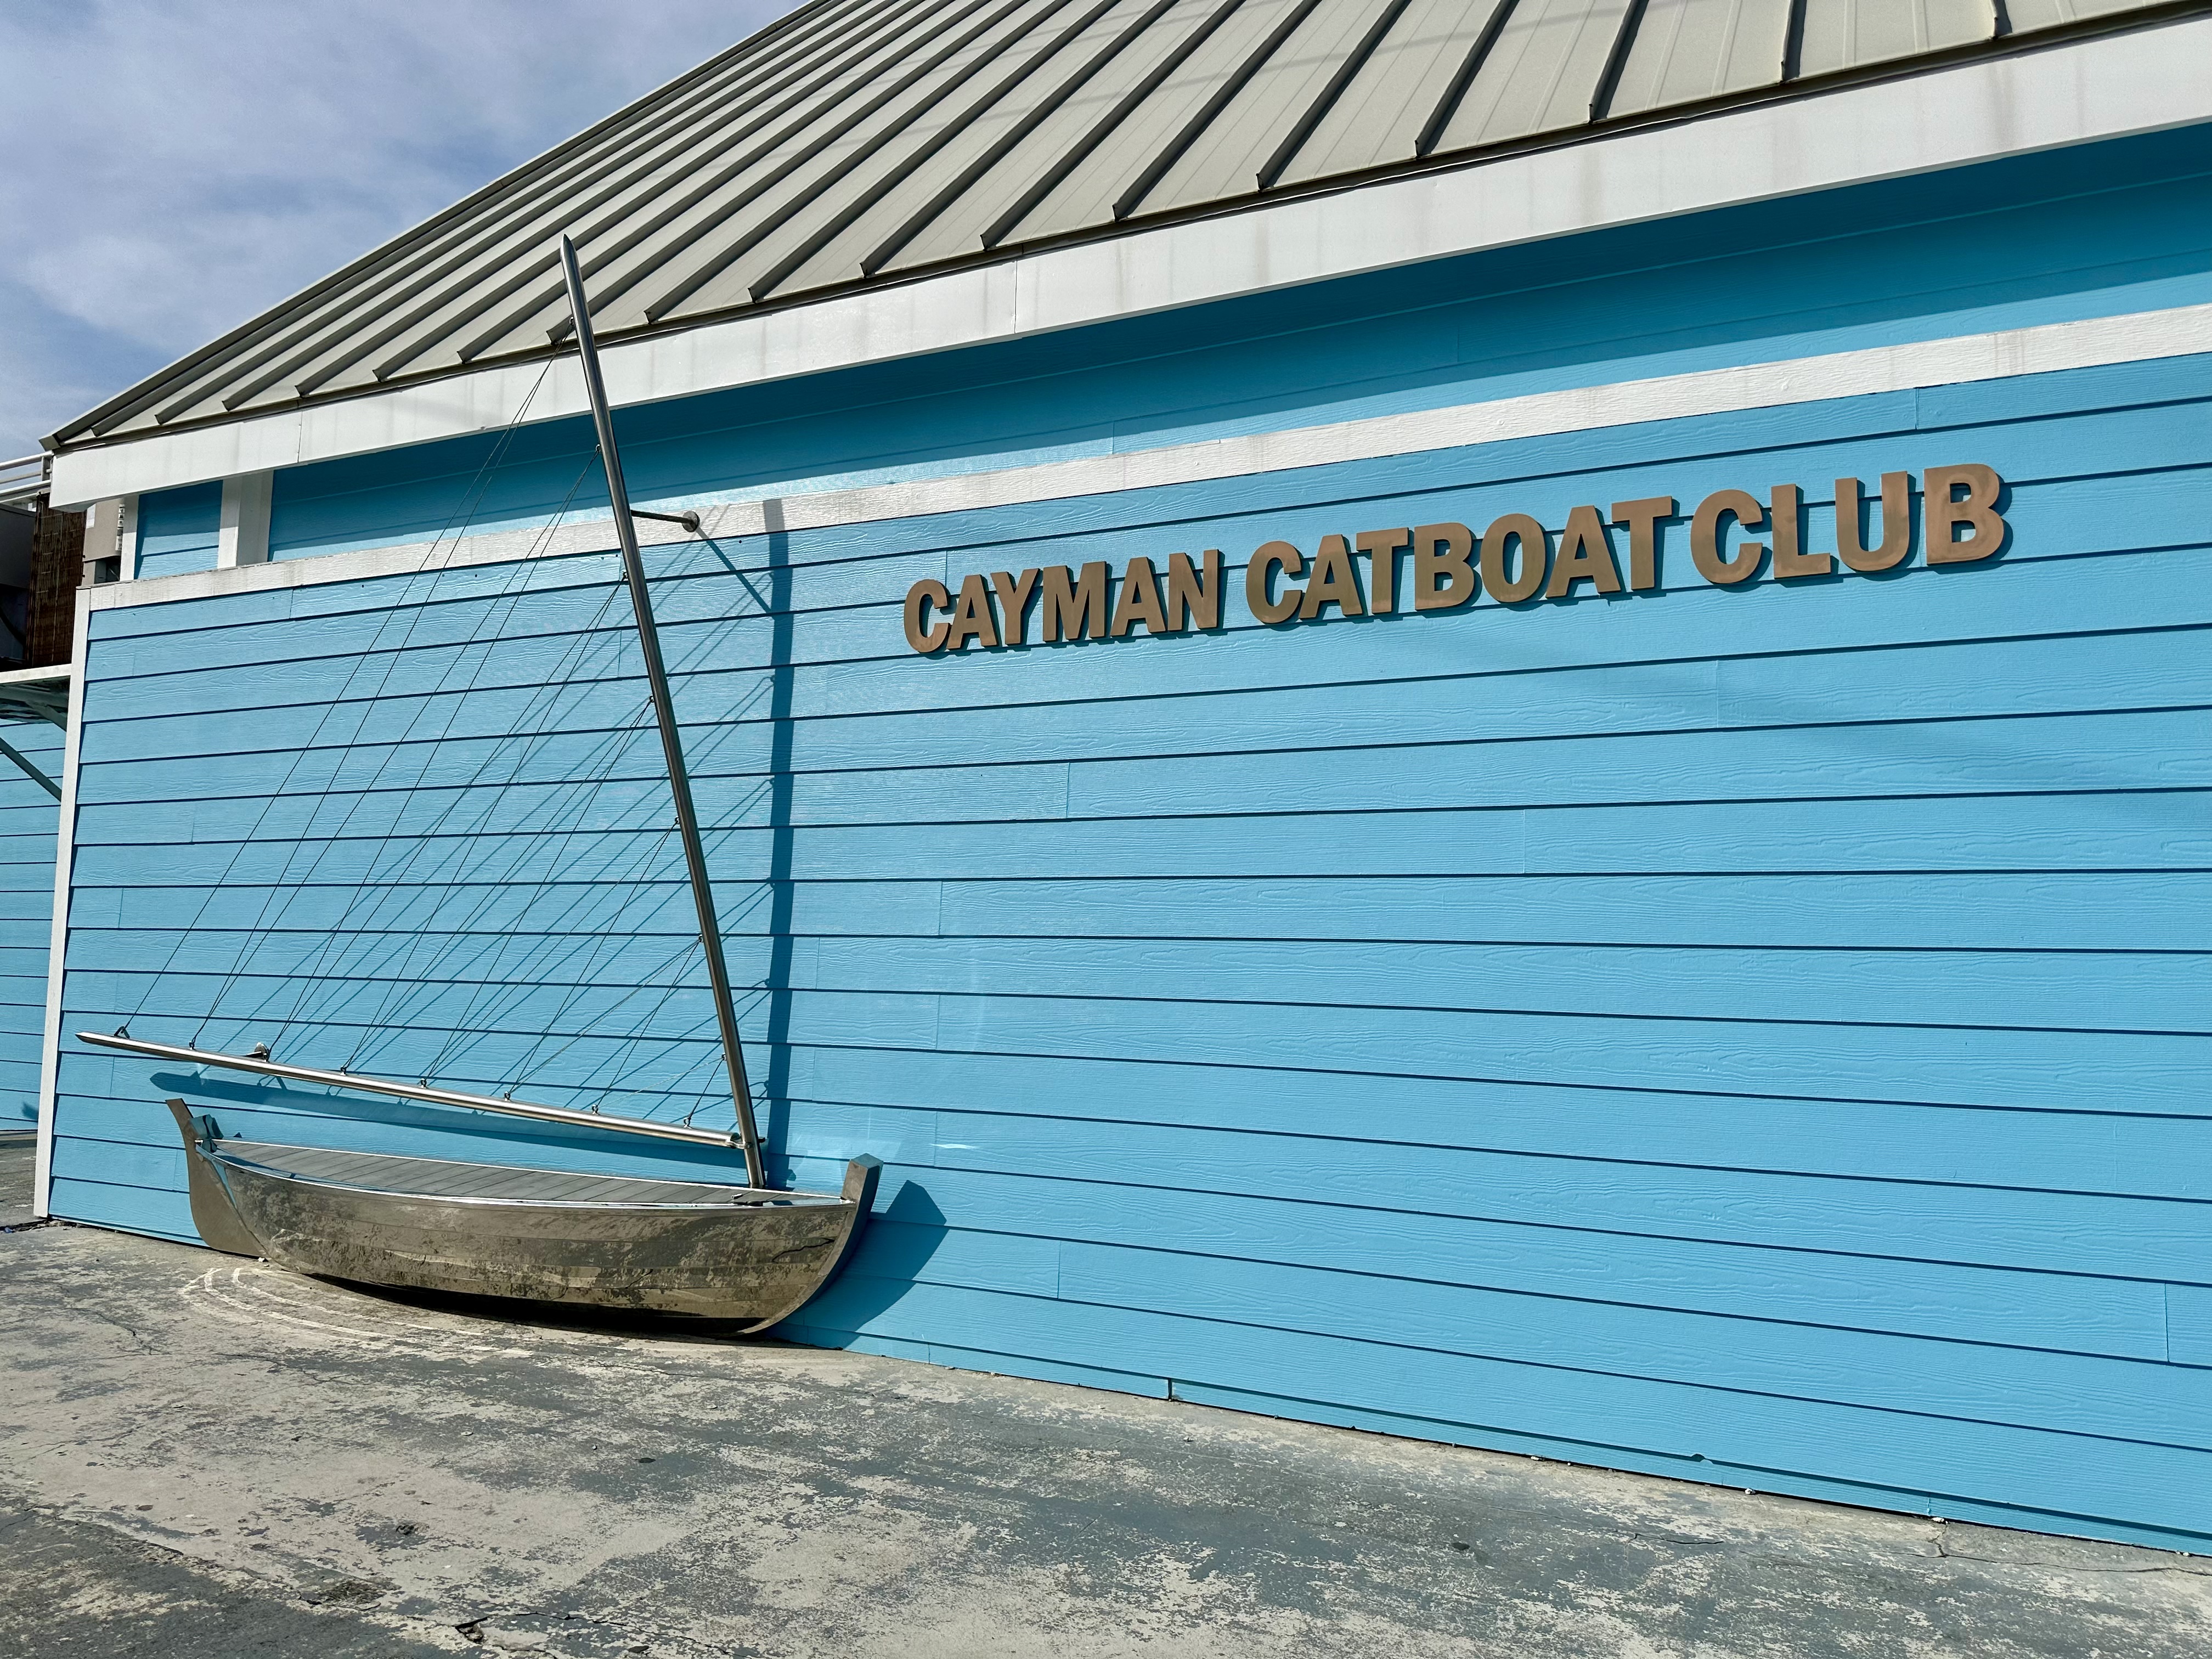 metal catboat sculpture sits on blue wall of Cayman Catboat Club